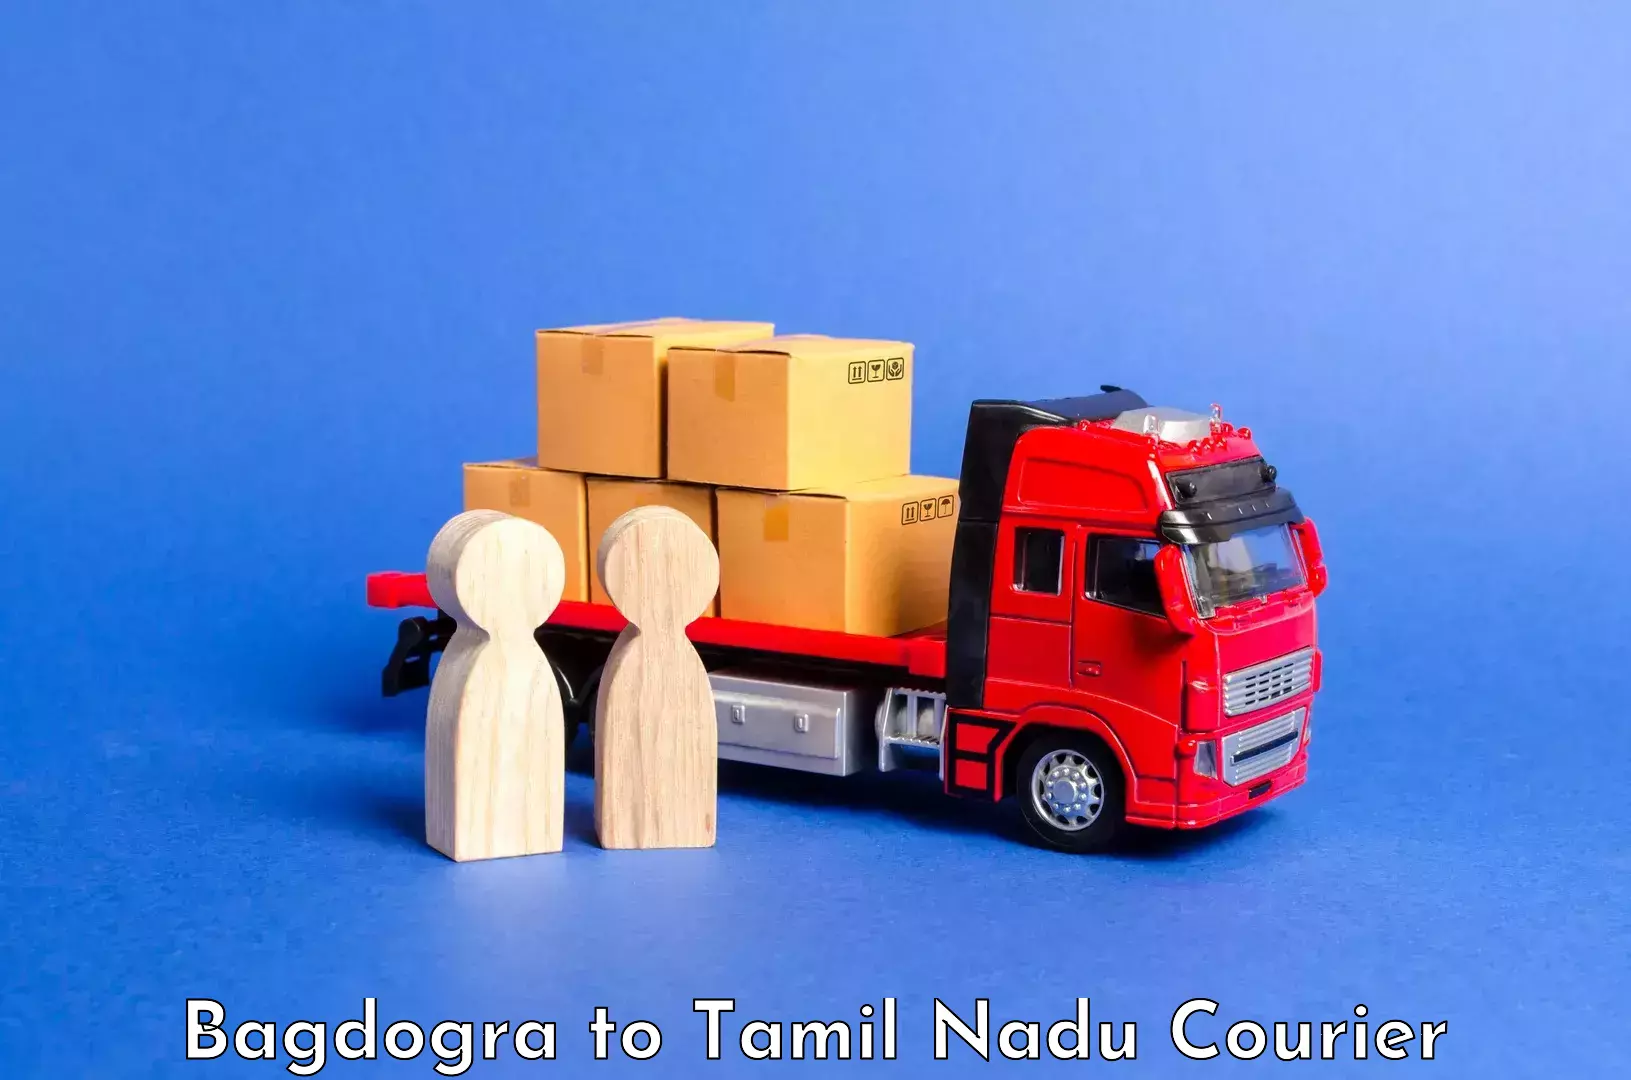 Baggage transport cost in Bagdogra to Thiruvadanai